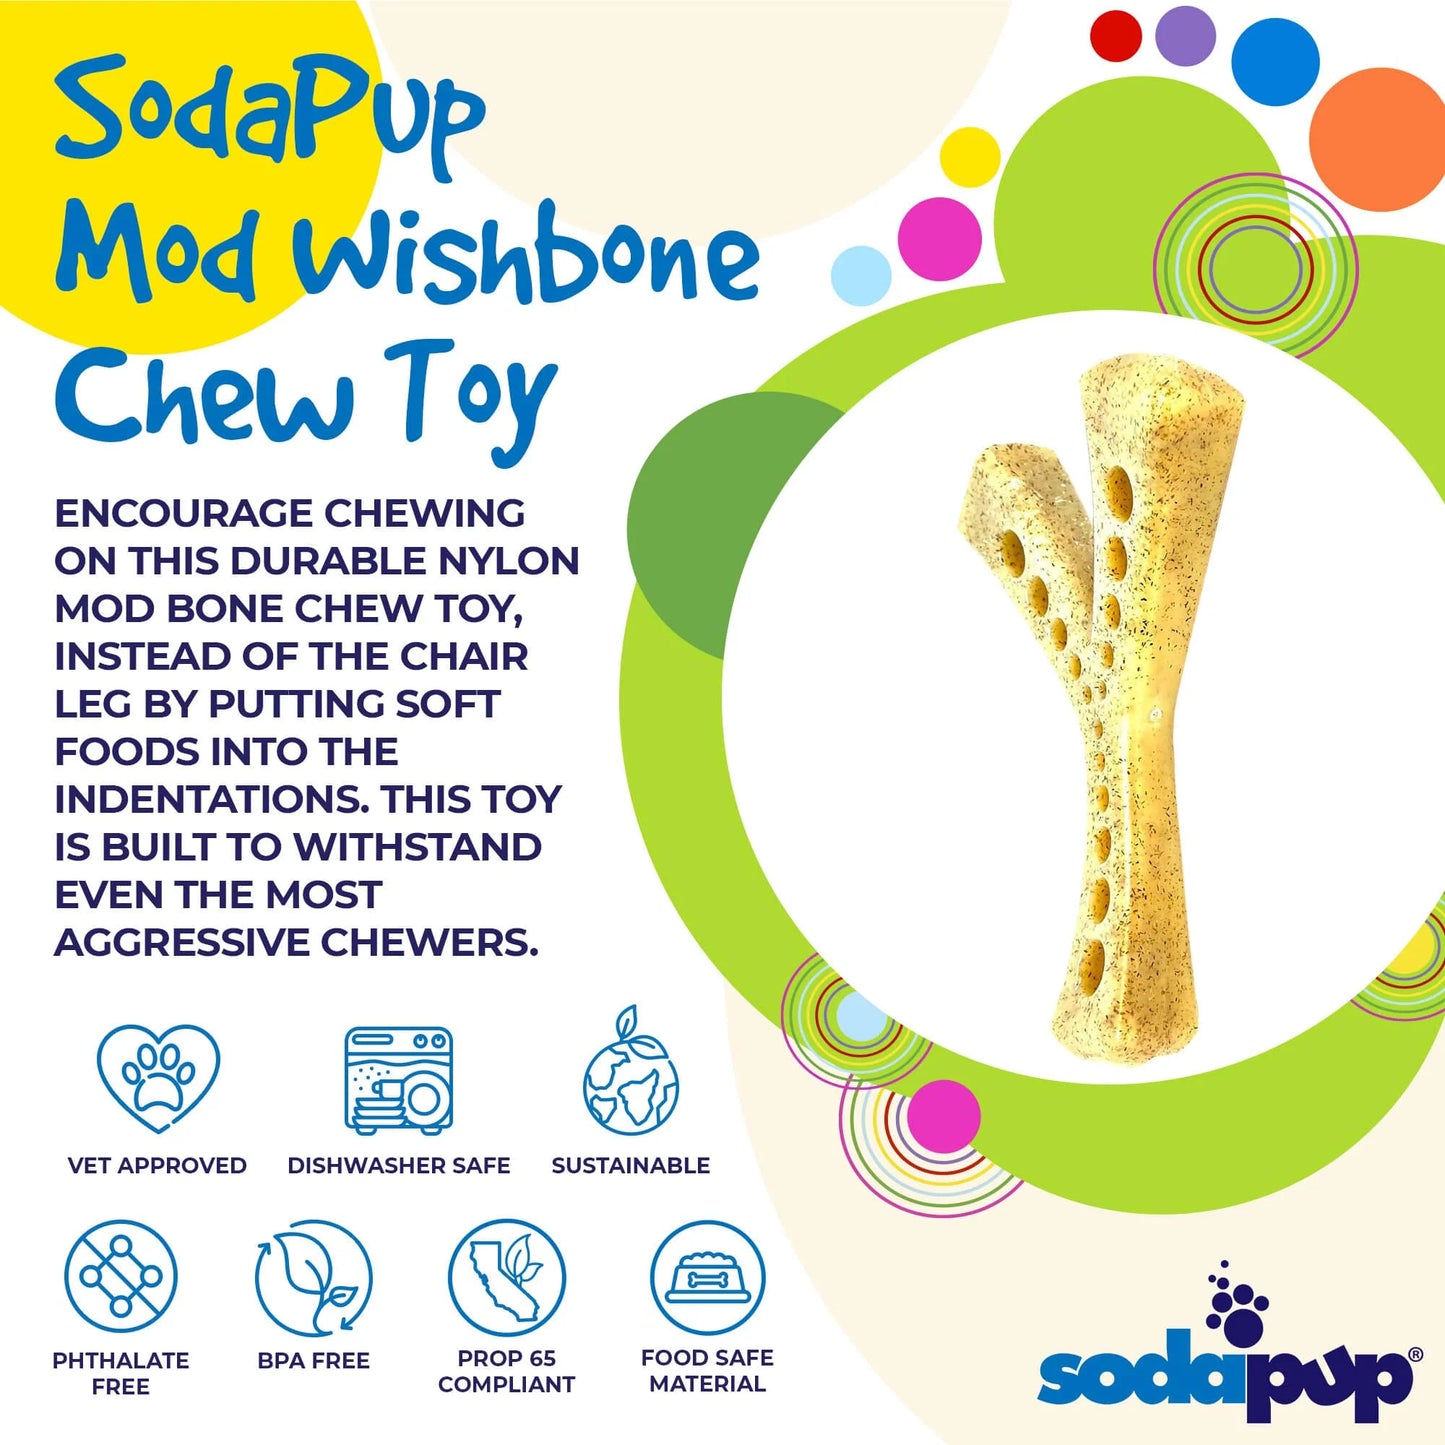 MOD Wishbone Ultra Durable Chew Toy